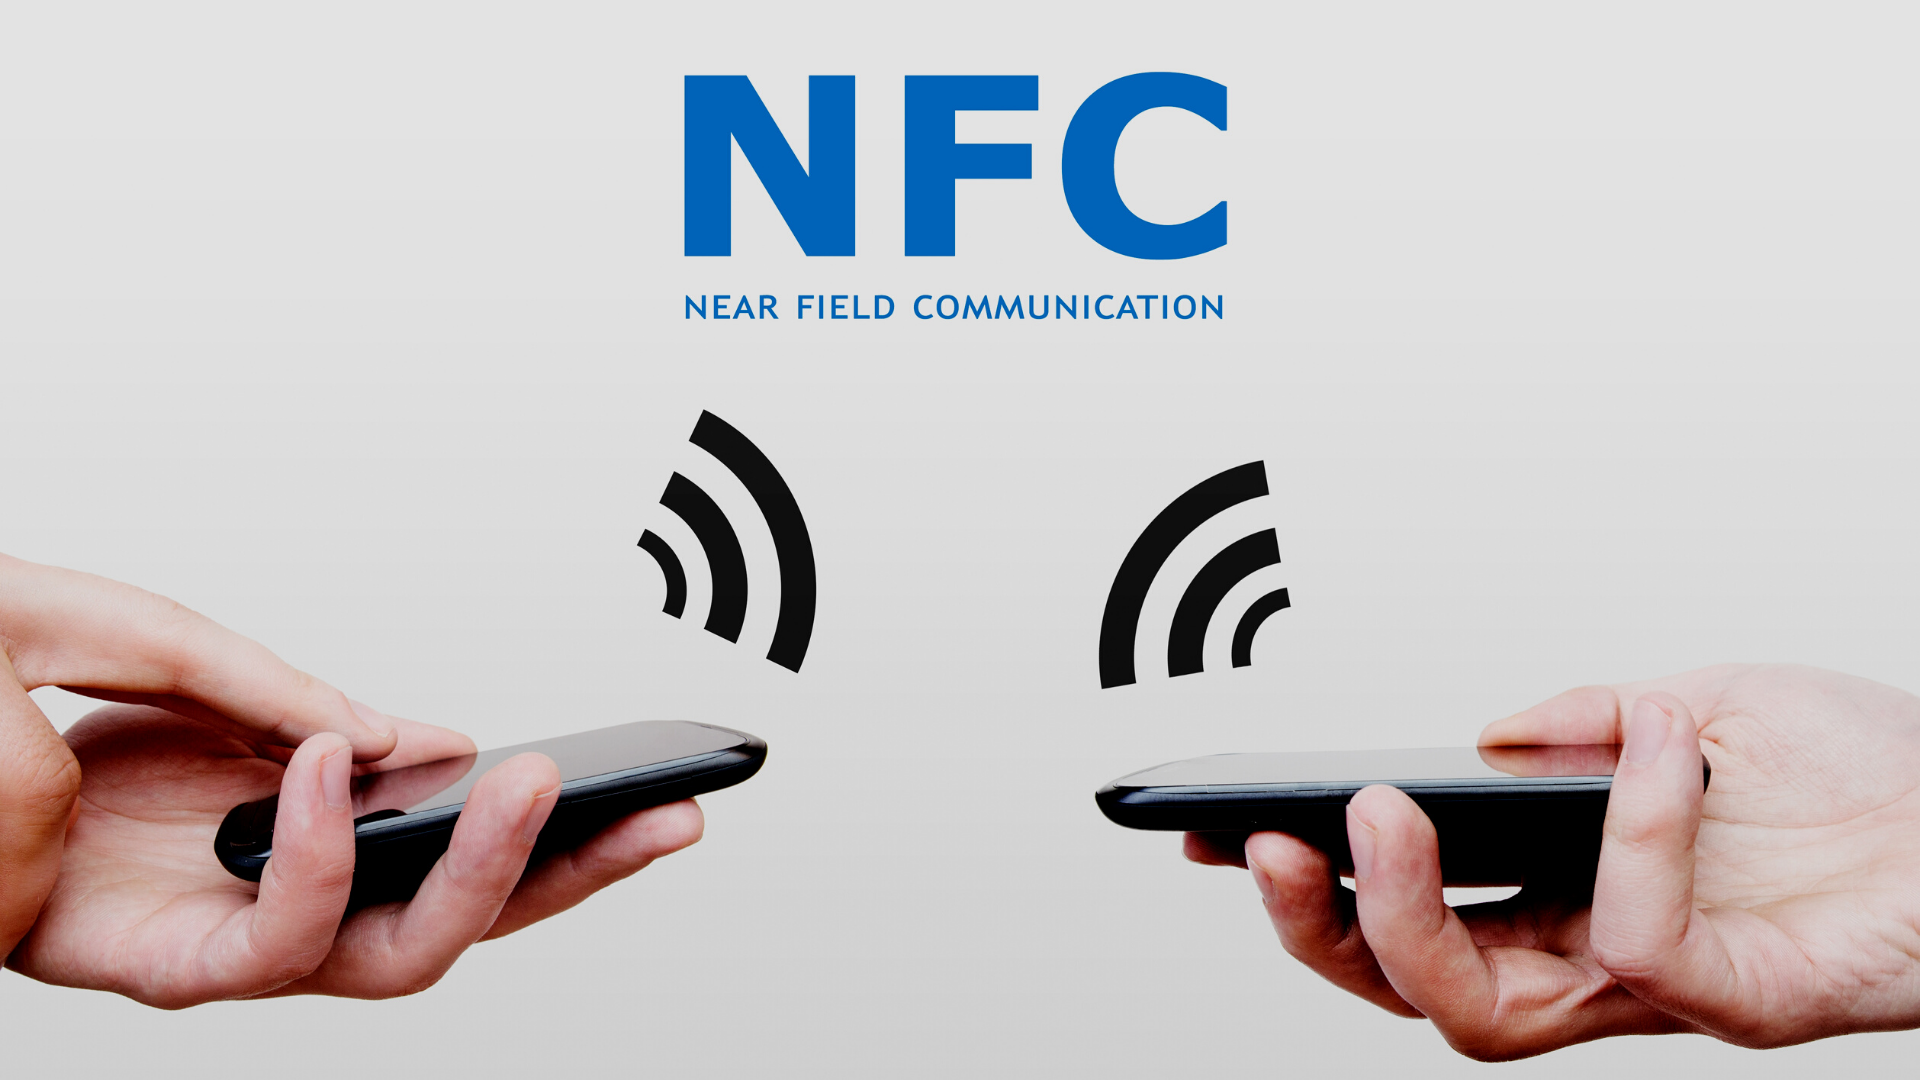 NFC картинки. NFC логотип. NFC технология. NFC чип. Метка для оплаты